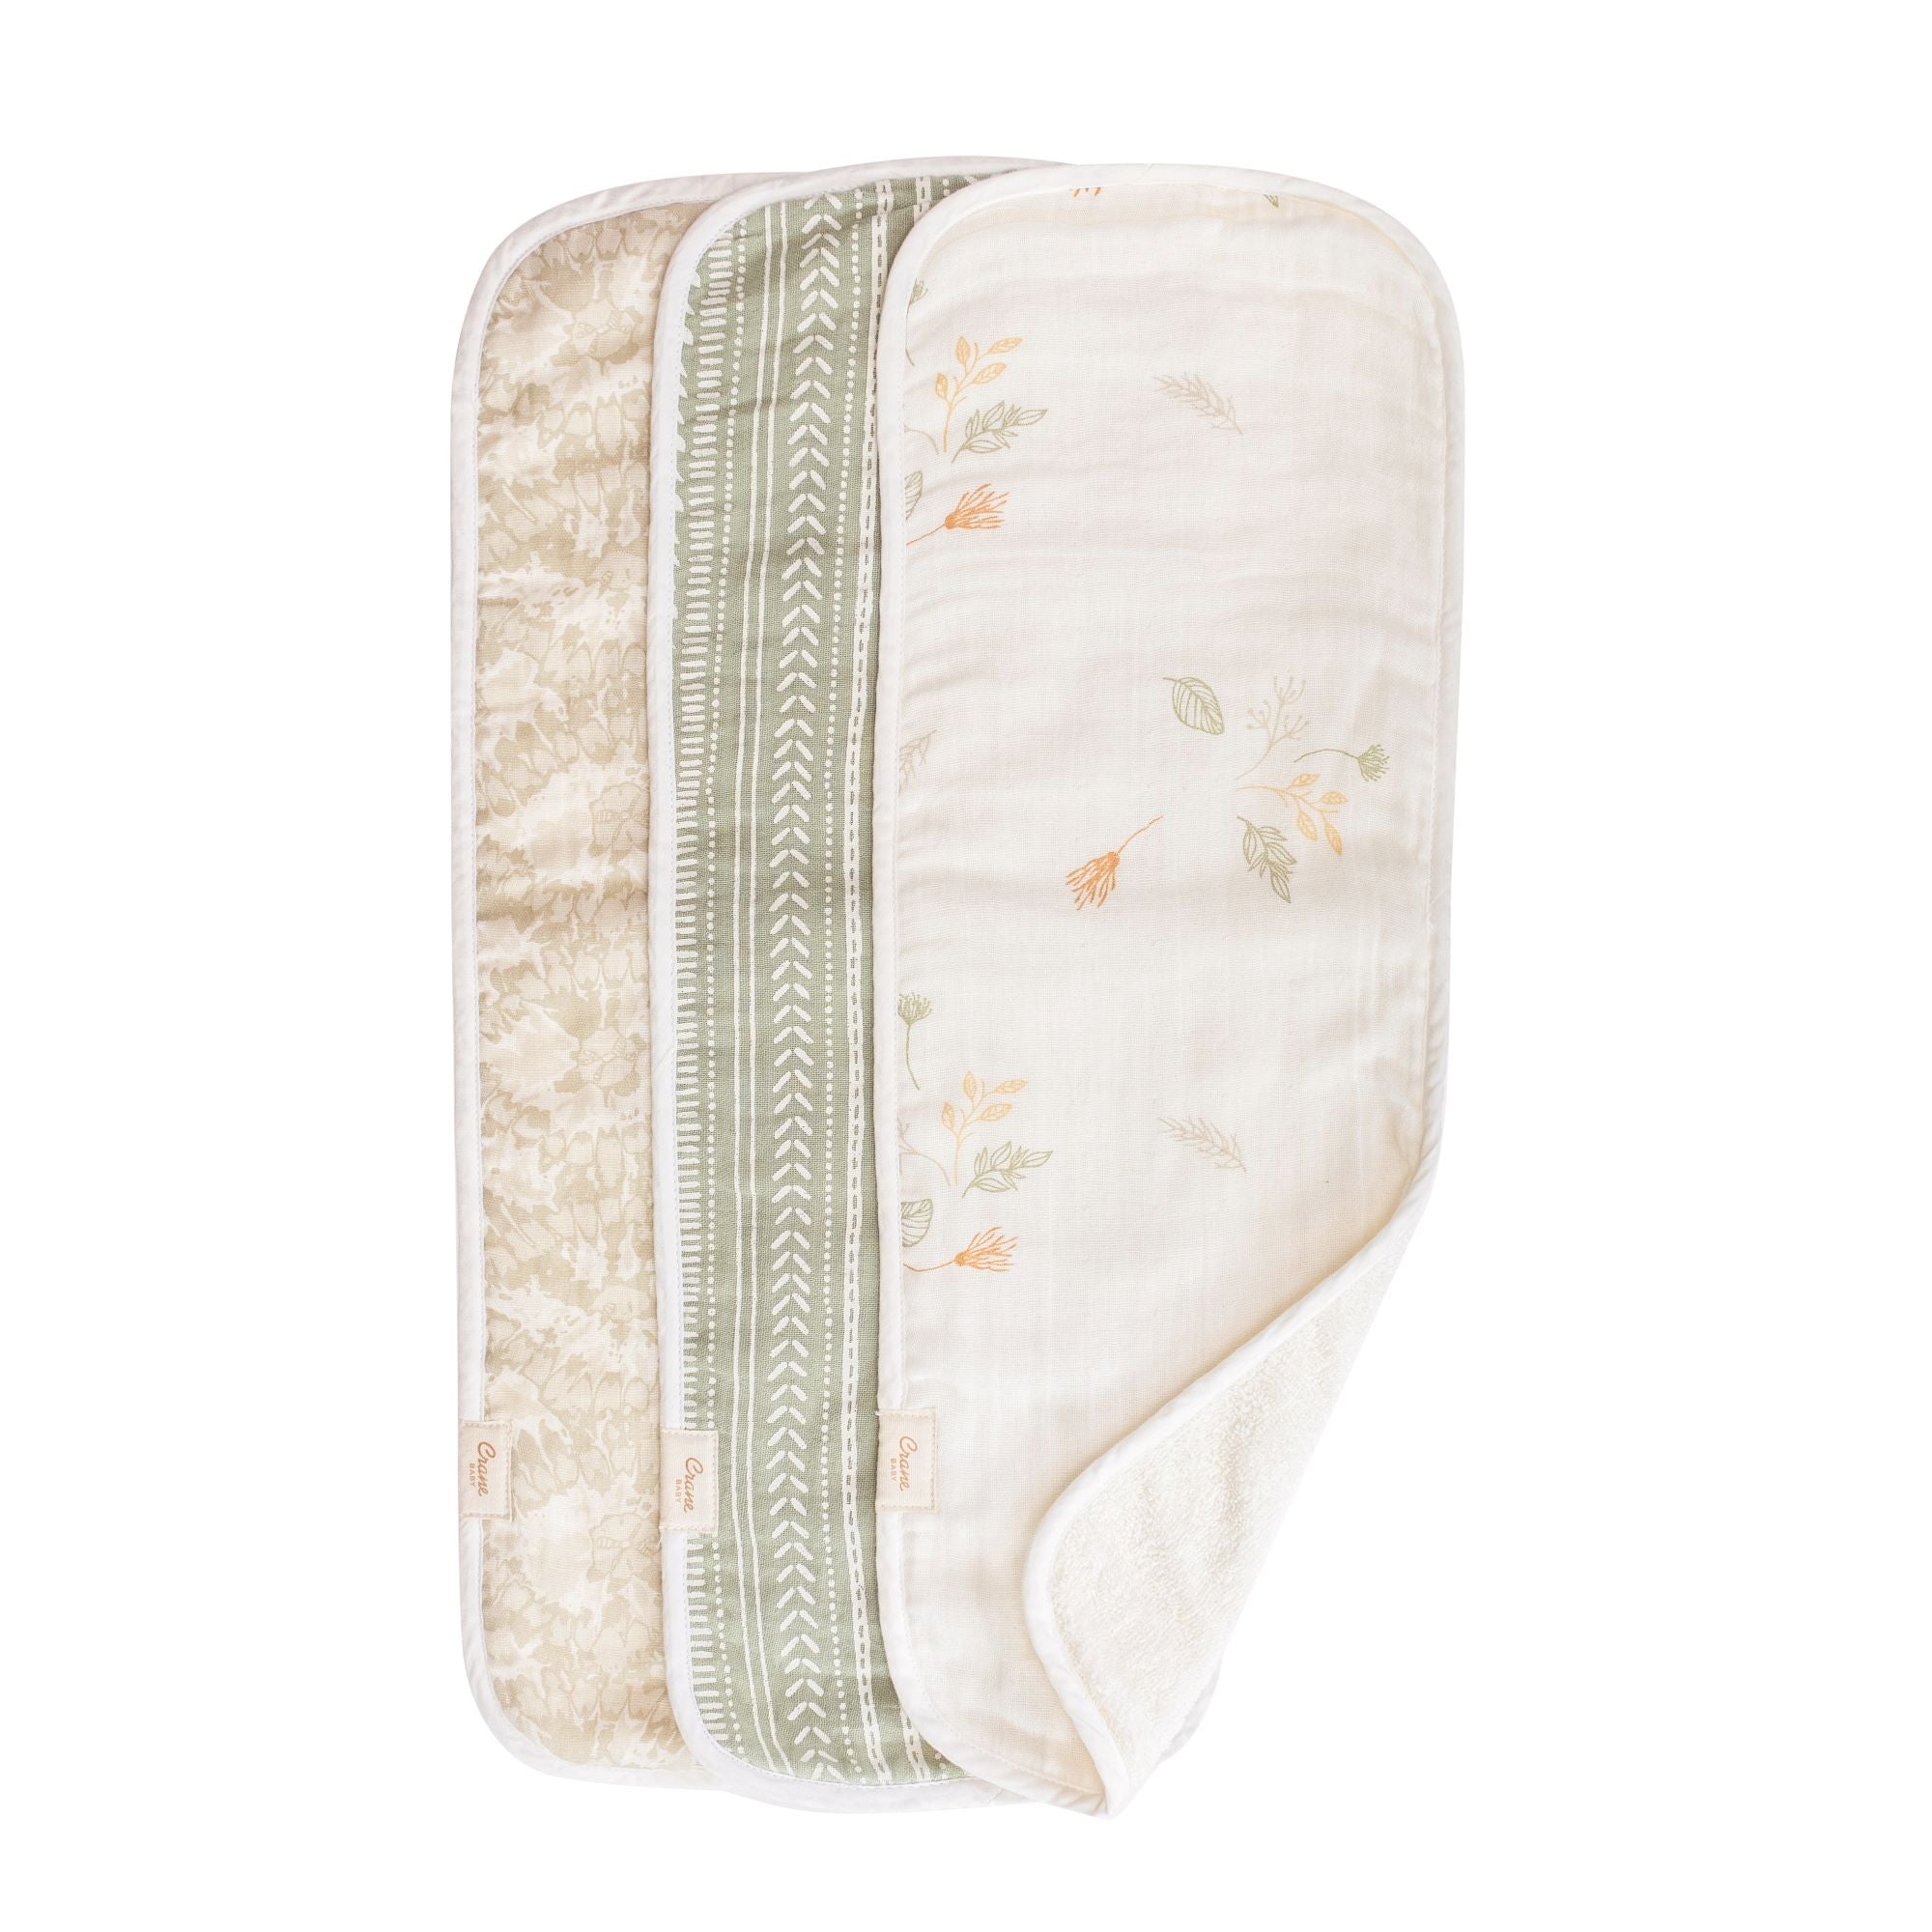 Crane Baby Burp Cloth Set Dainty Leaf Willow Collection - Cream